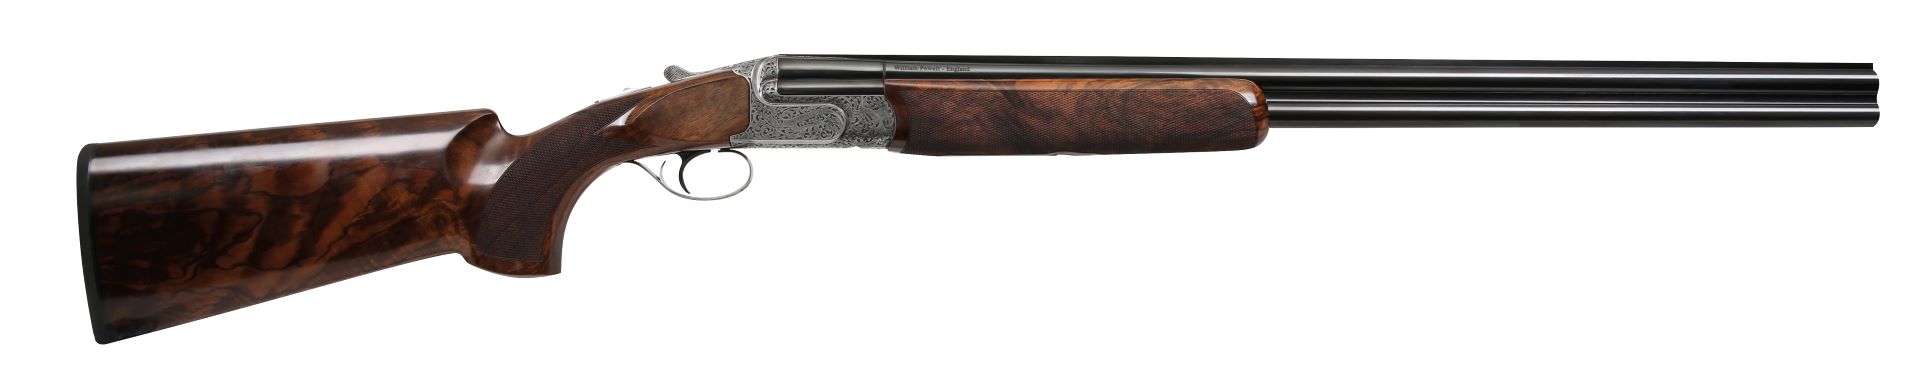 William Powell prestige shotgun